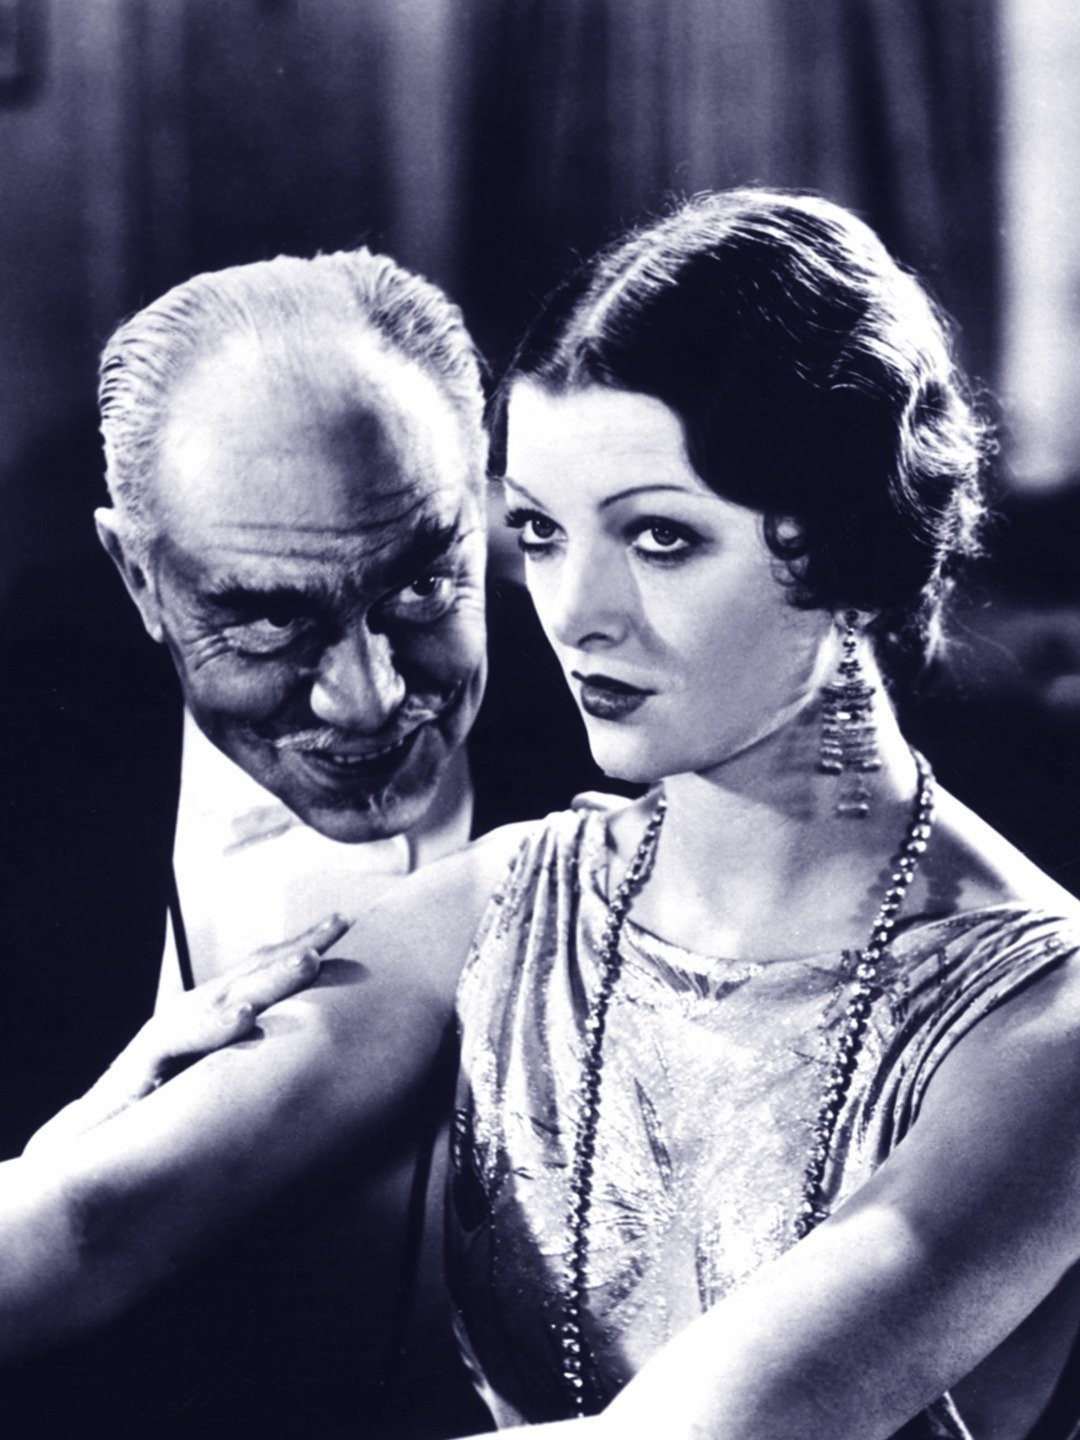 Vanity Fair (1932) - Filmaffinity